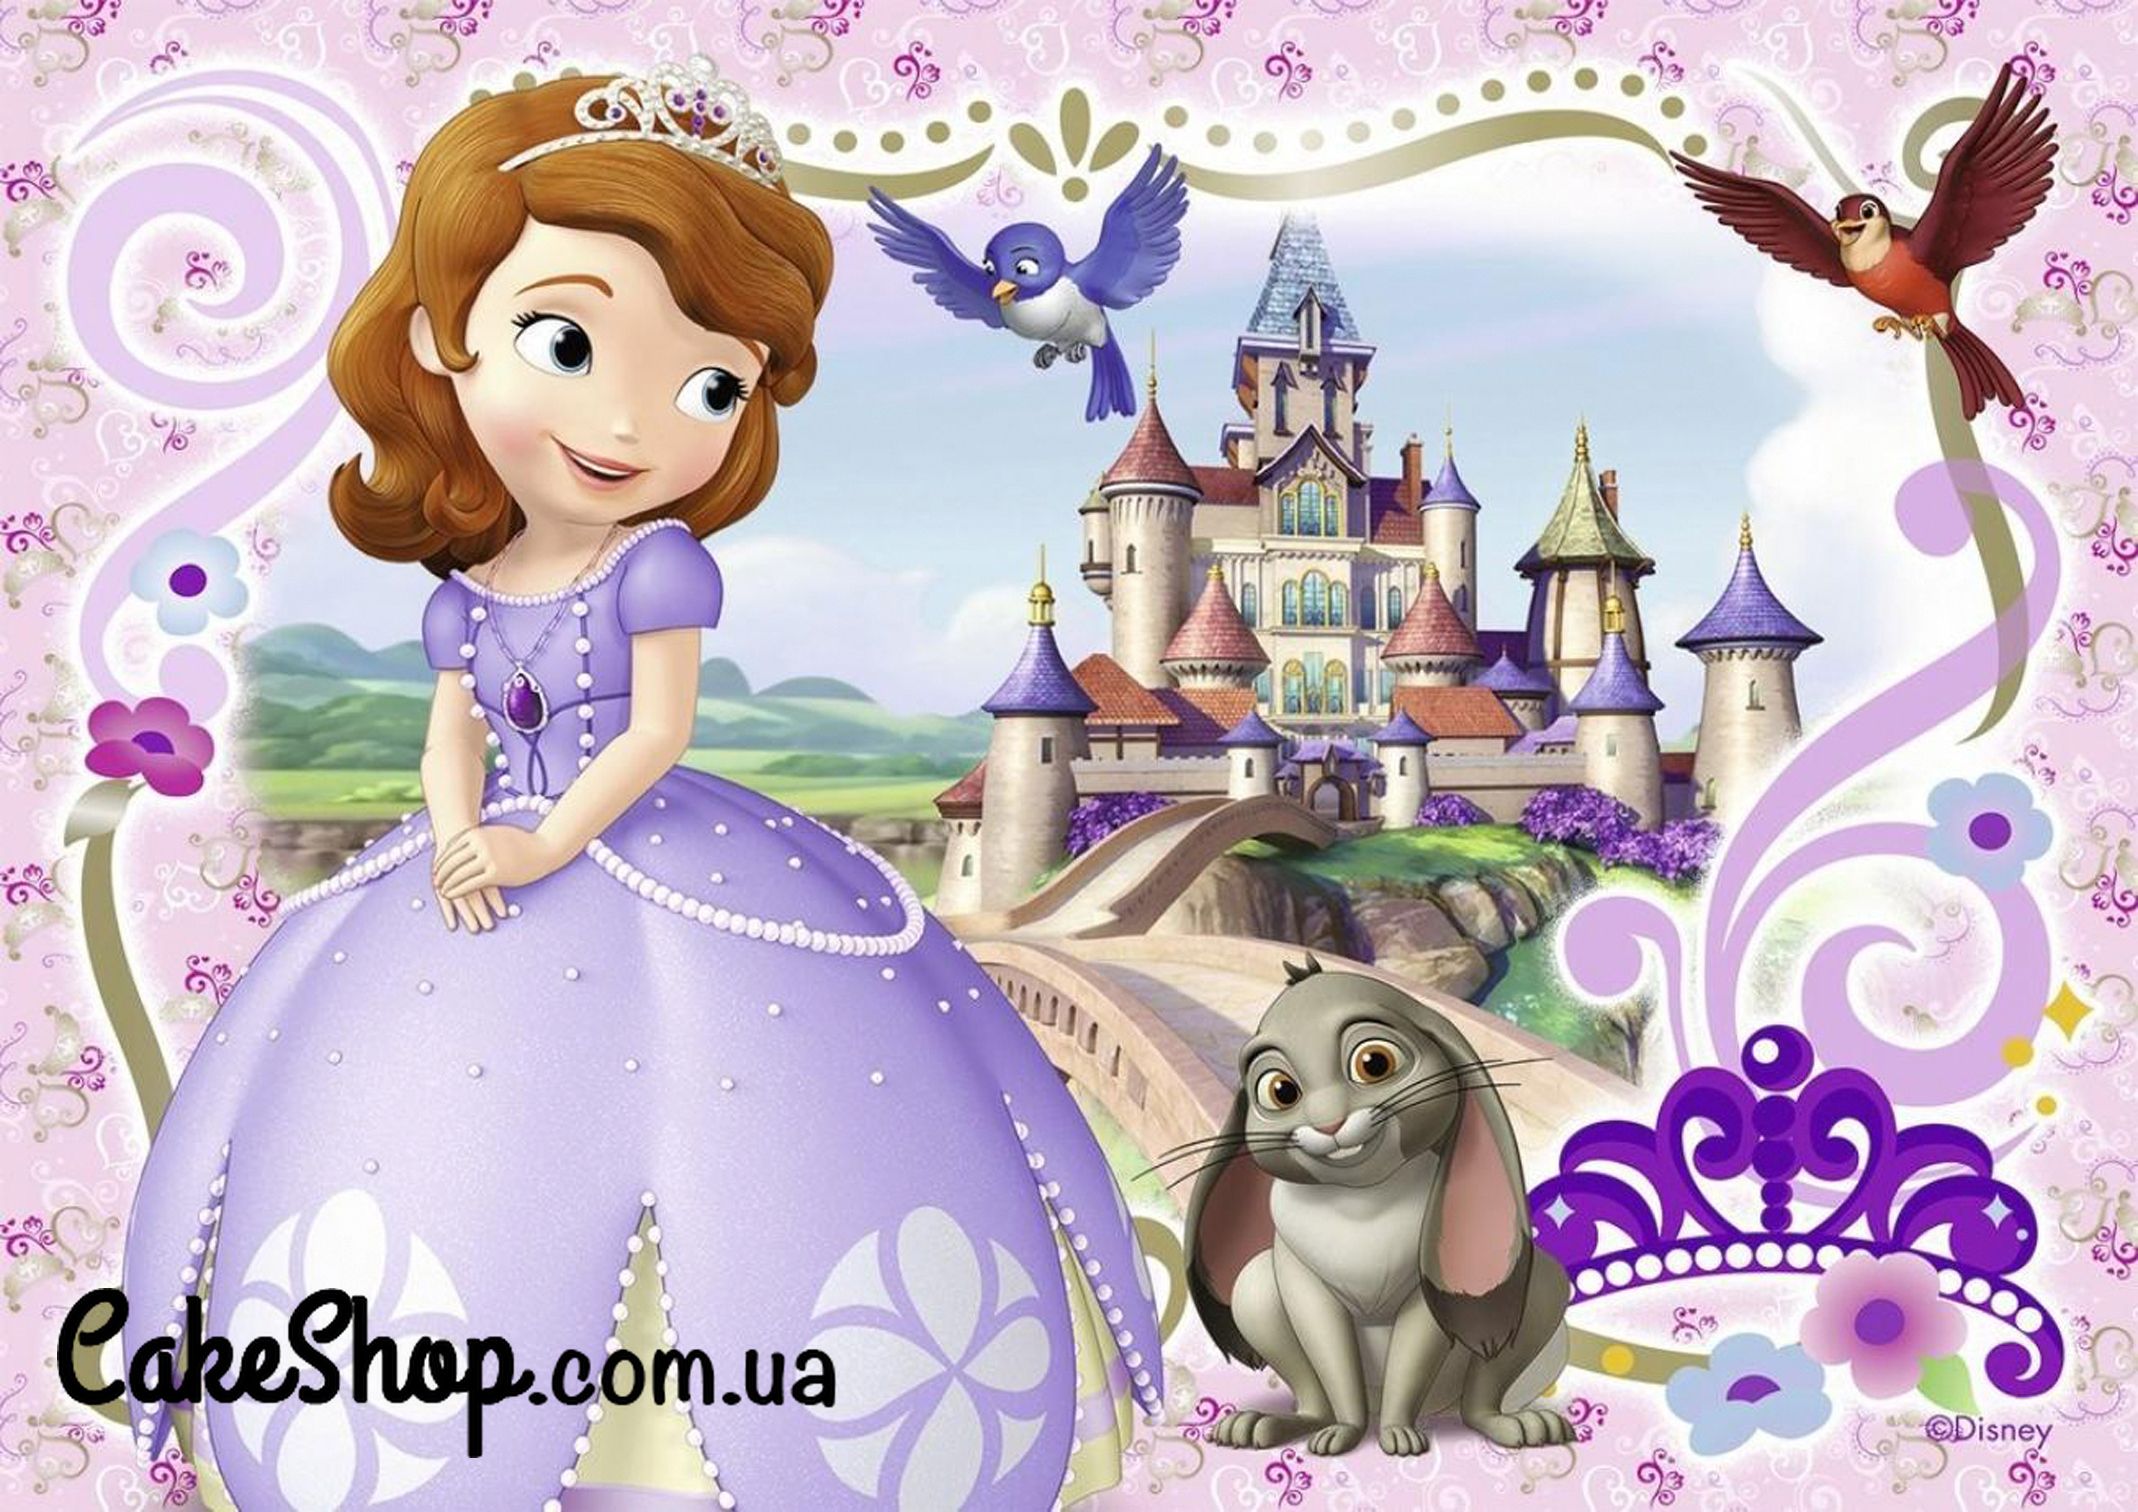 ⋗ Цукрова картинка Принцеса Софія 6 купити в Україні ➛ CakeShop.com.ua, фото